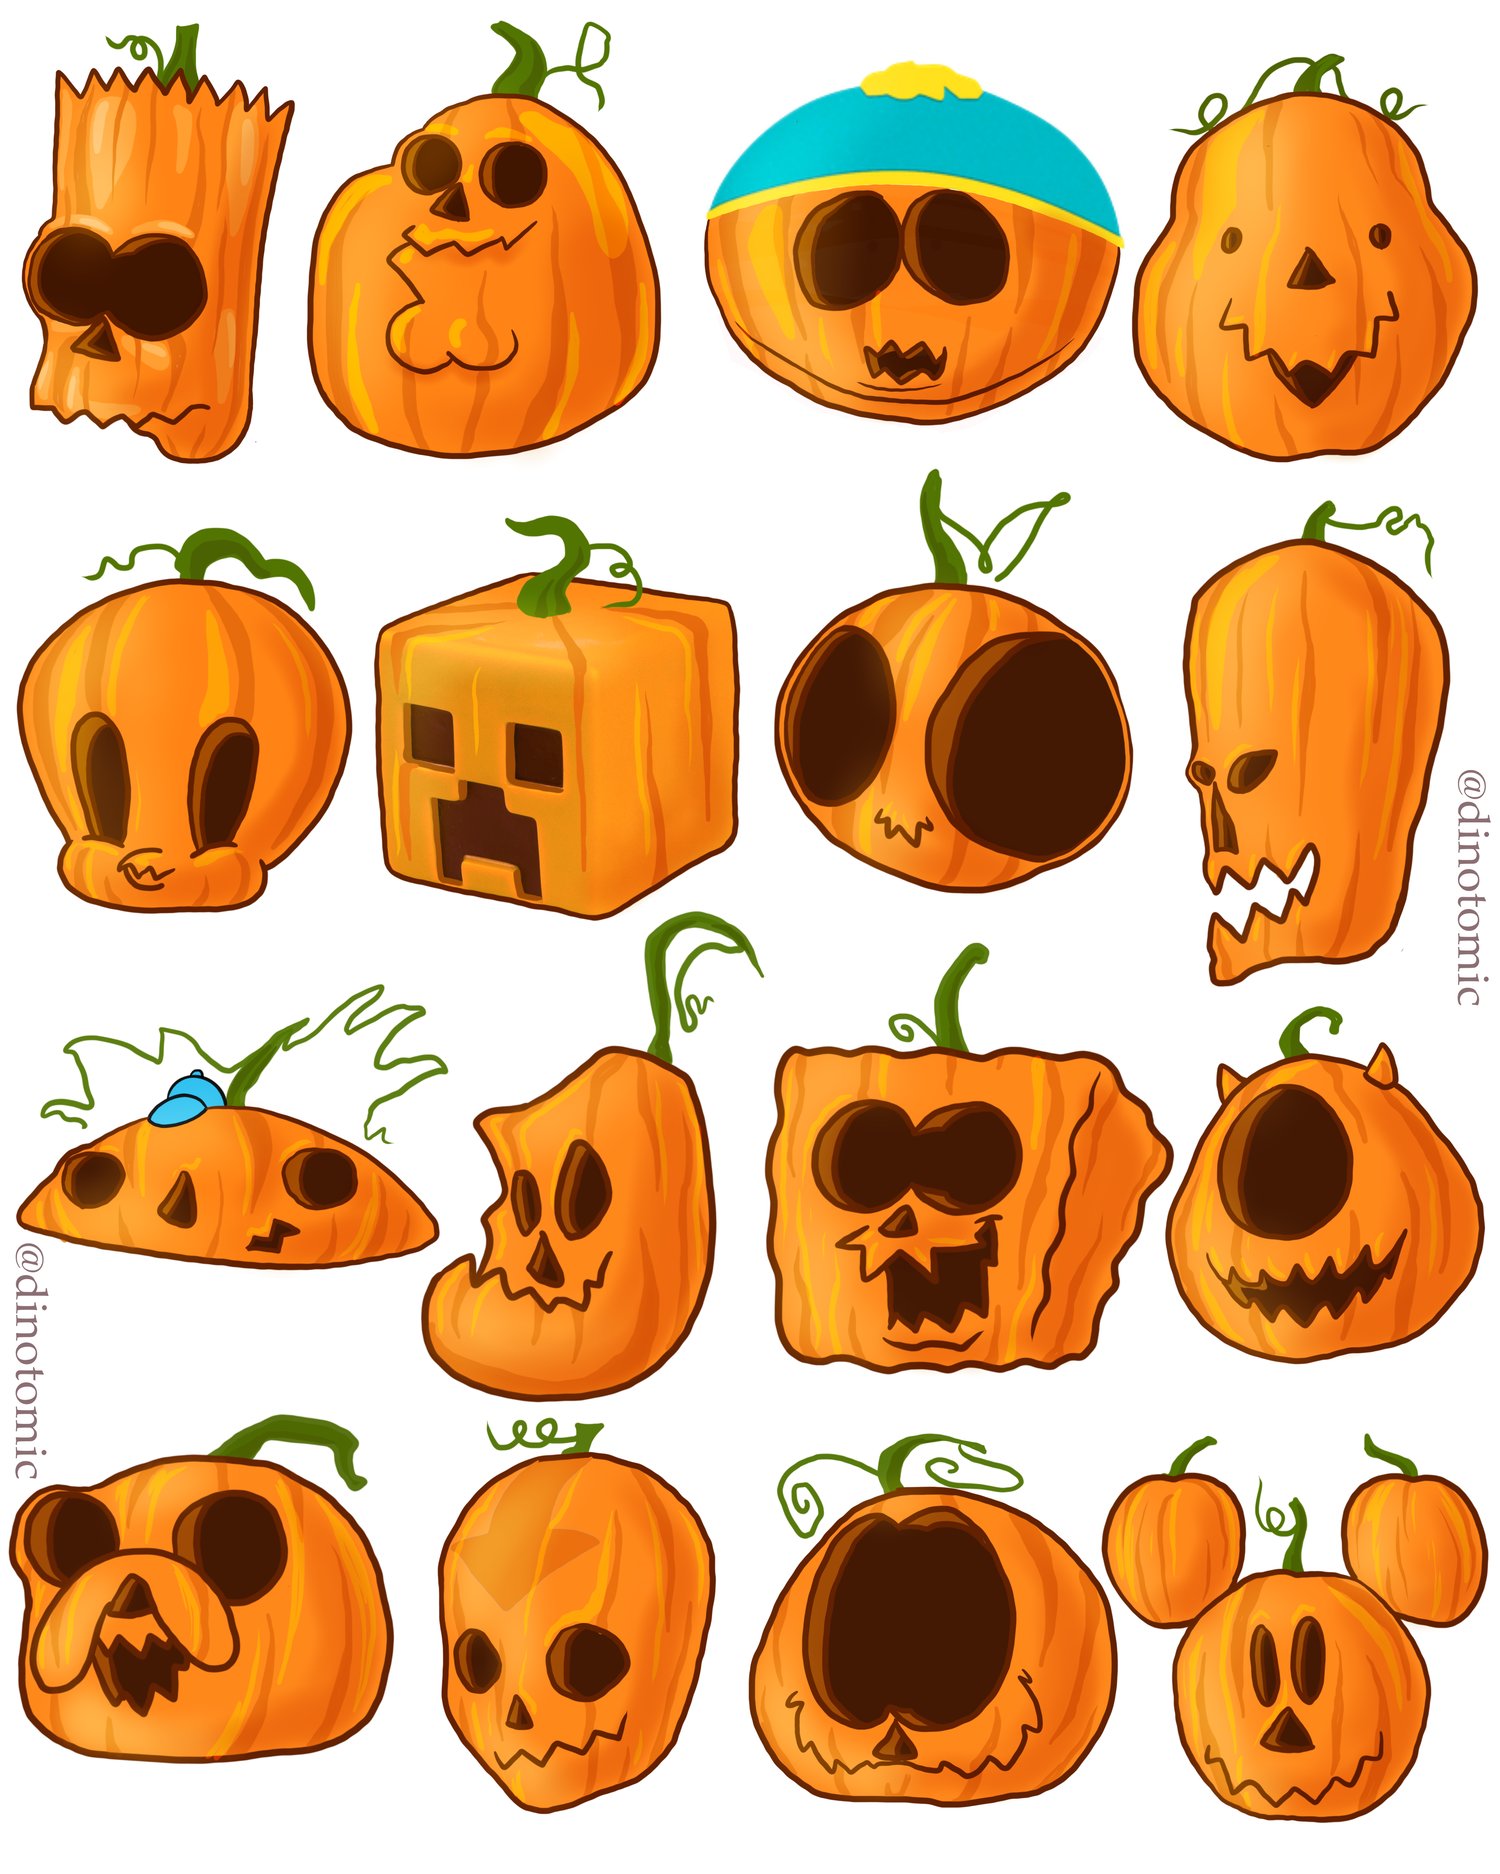 Image of #282 Pumpkin characters print 